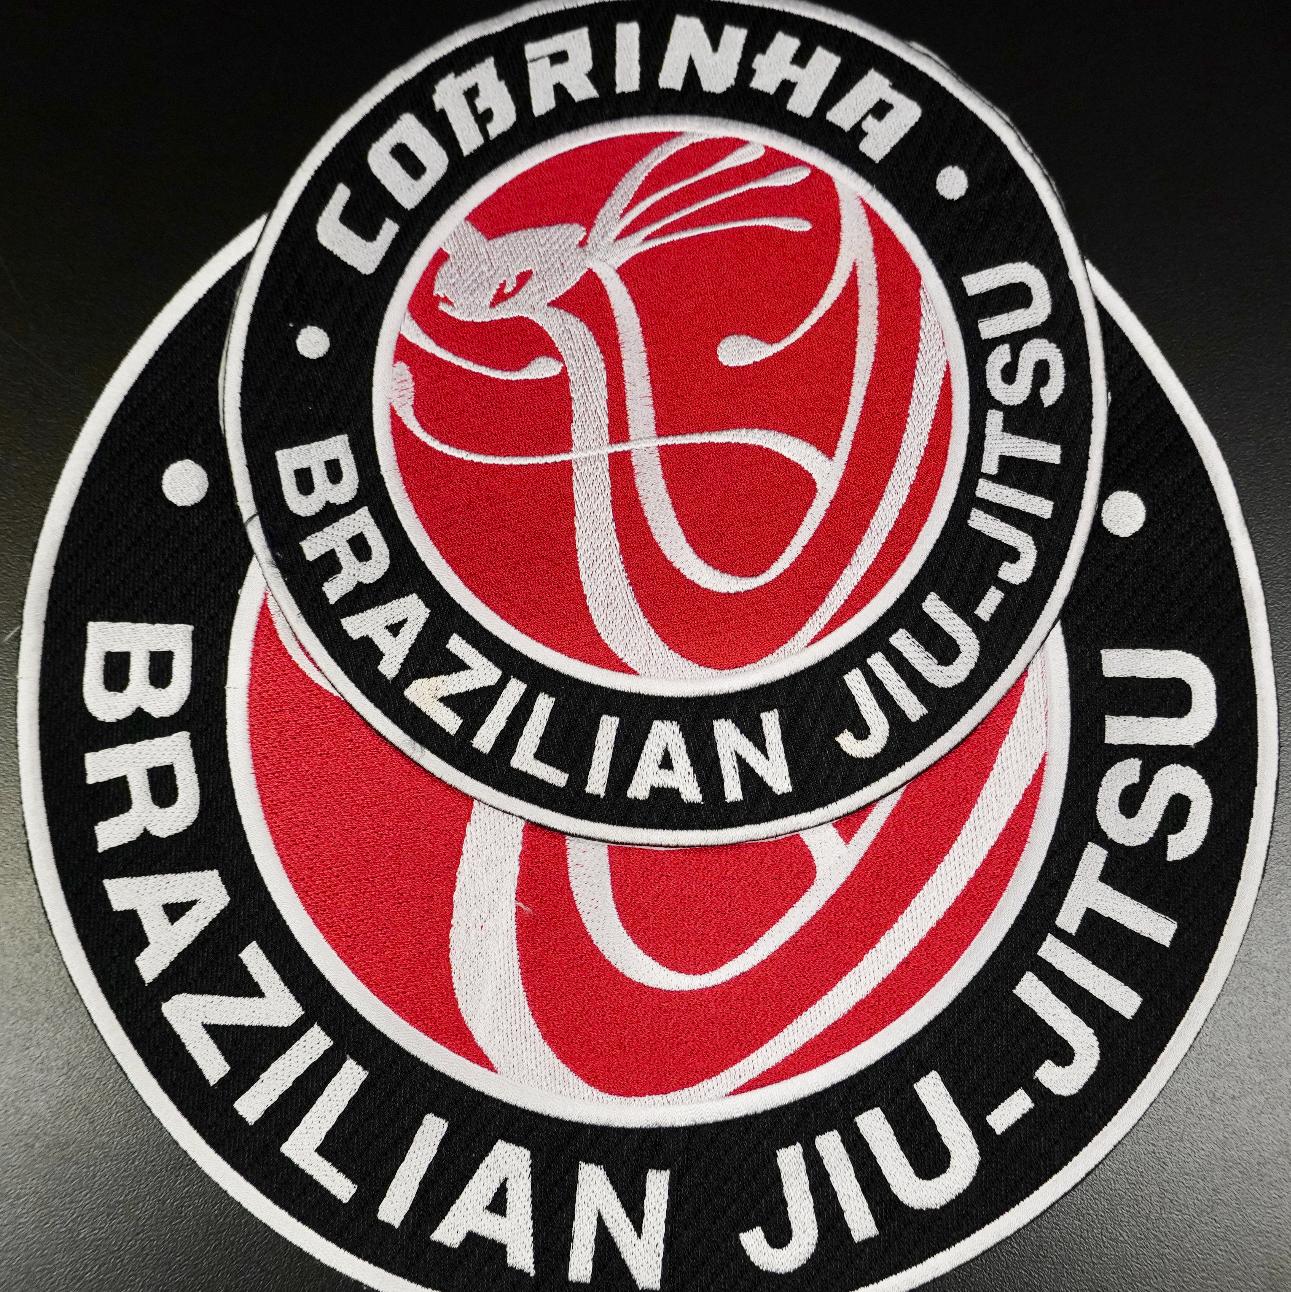 Cobrinha Brazilian Jiu-Jitsu San Bernardino